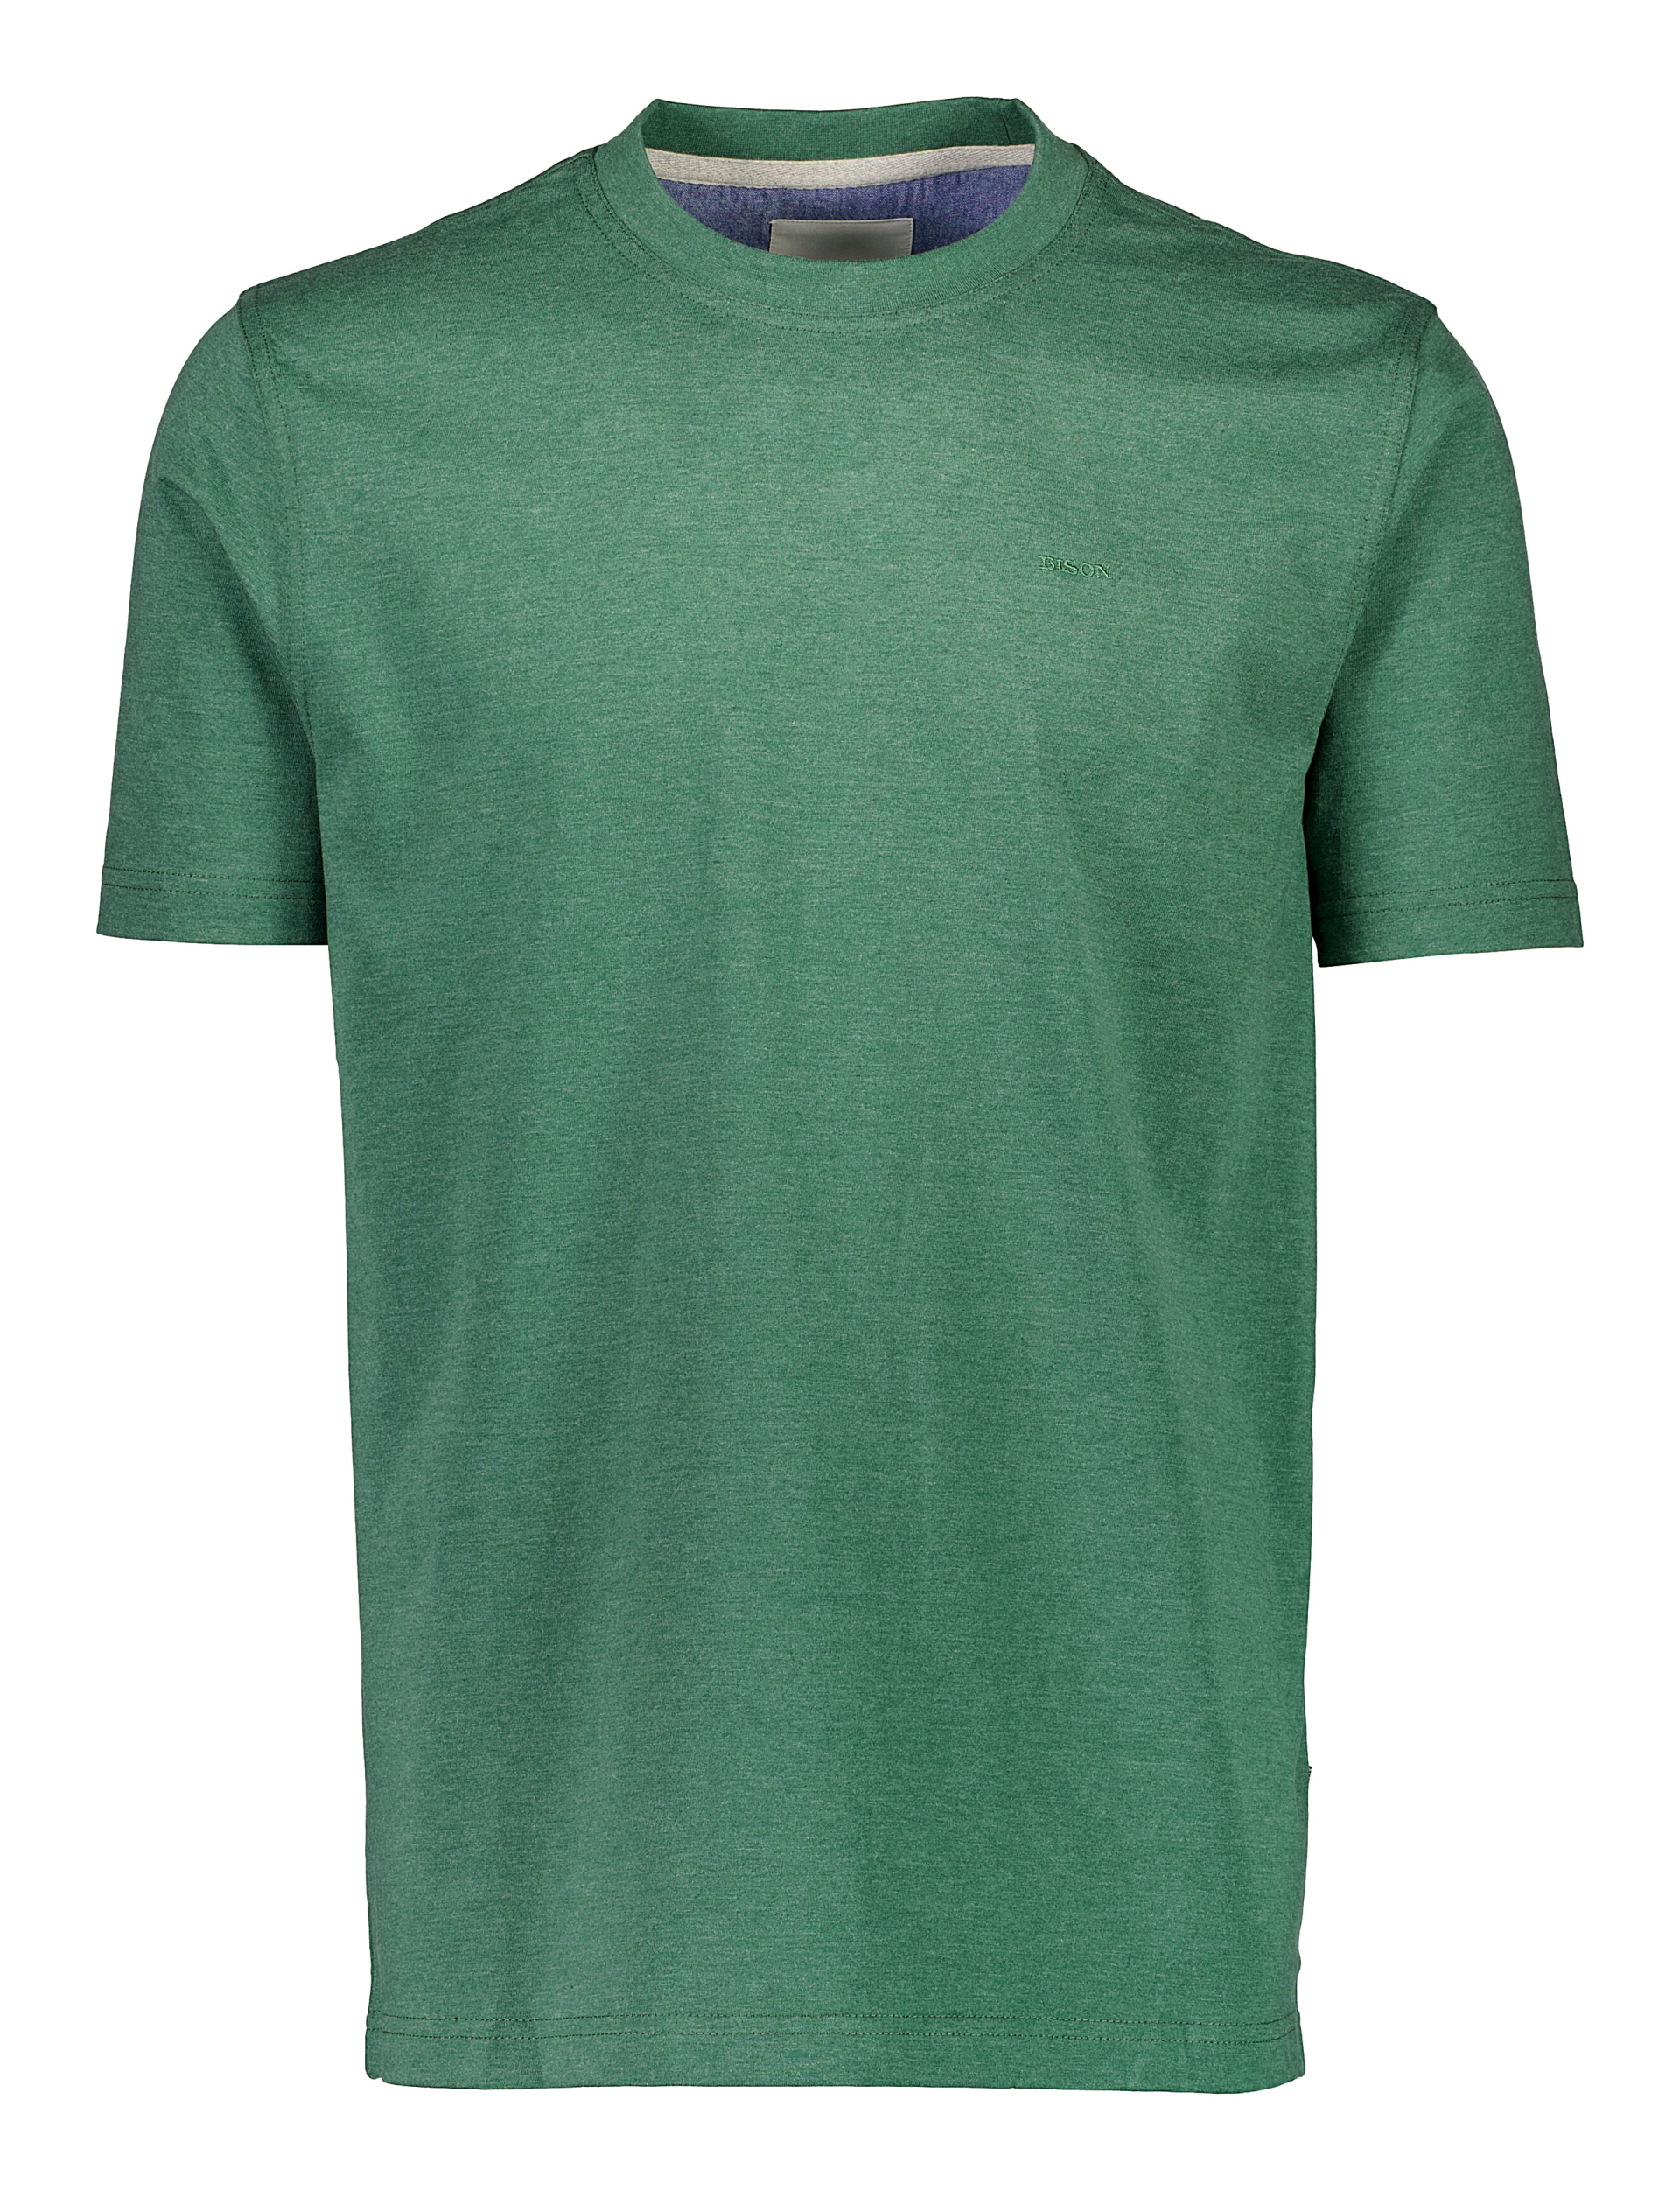 Bison T-shirt grön / green mel